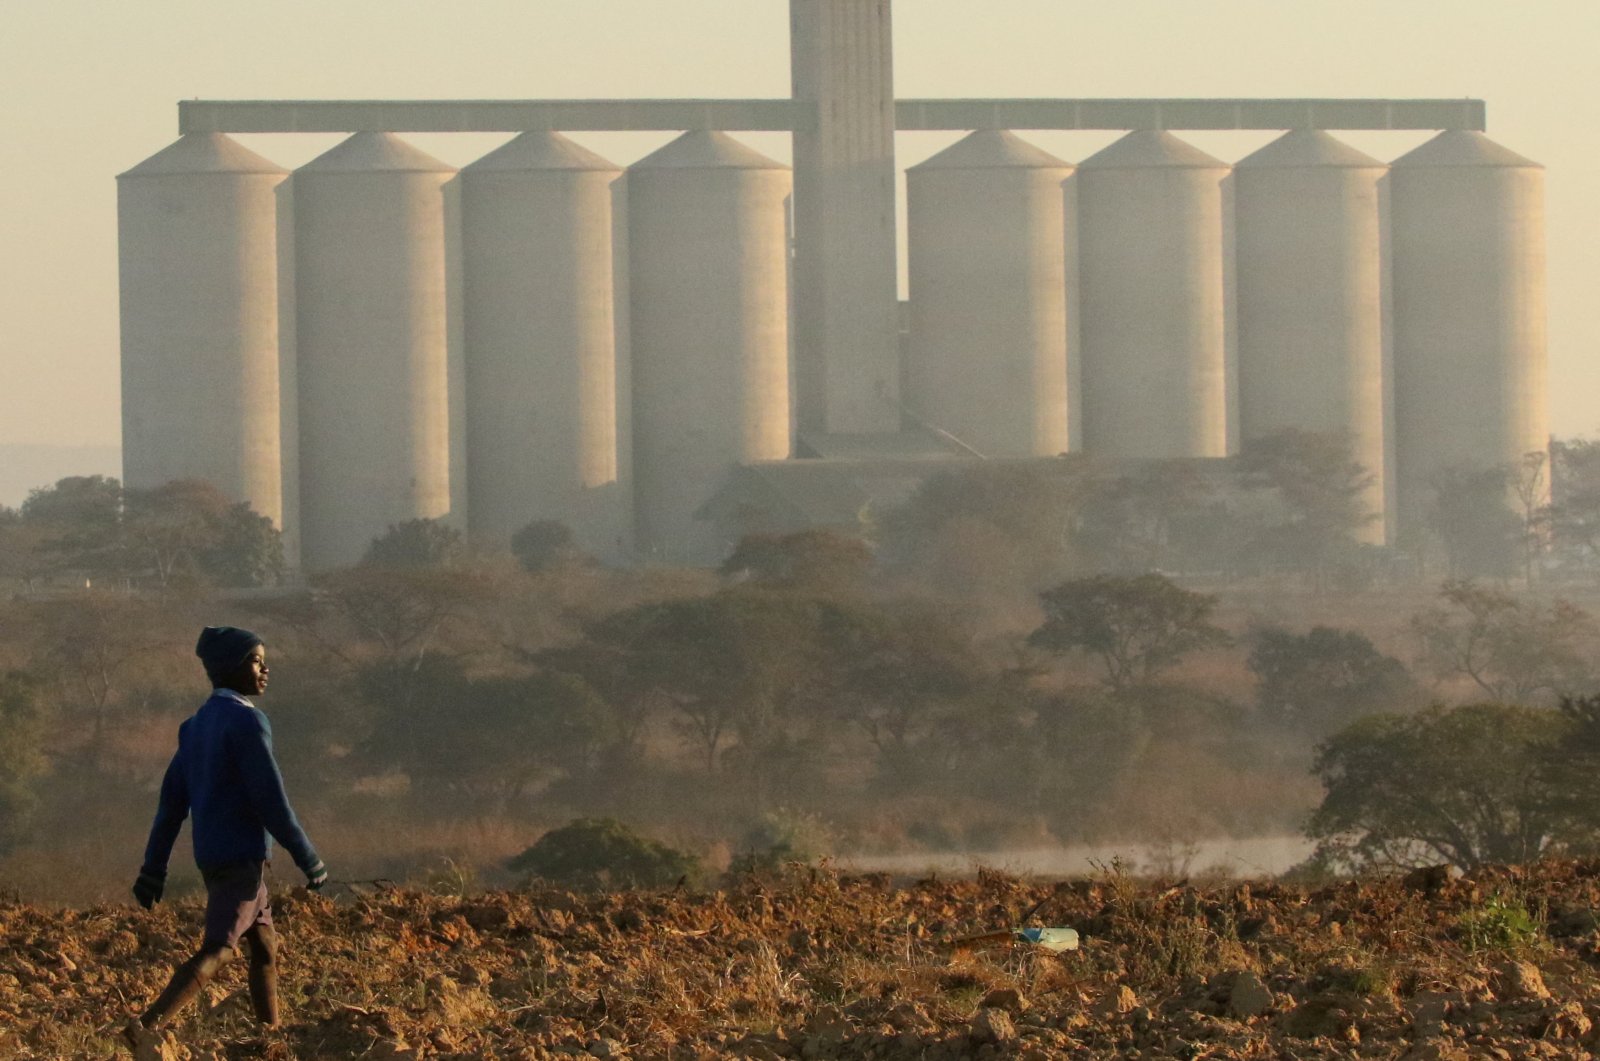 A boy walks along a prepared field in front of grain silos in the farming area of Chinhoyi, Zimbabwe, July 26, 2017. (Reuters Photo)